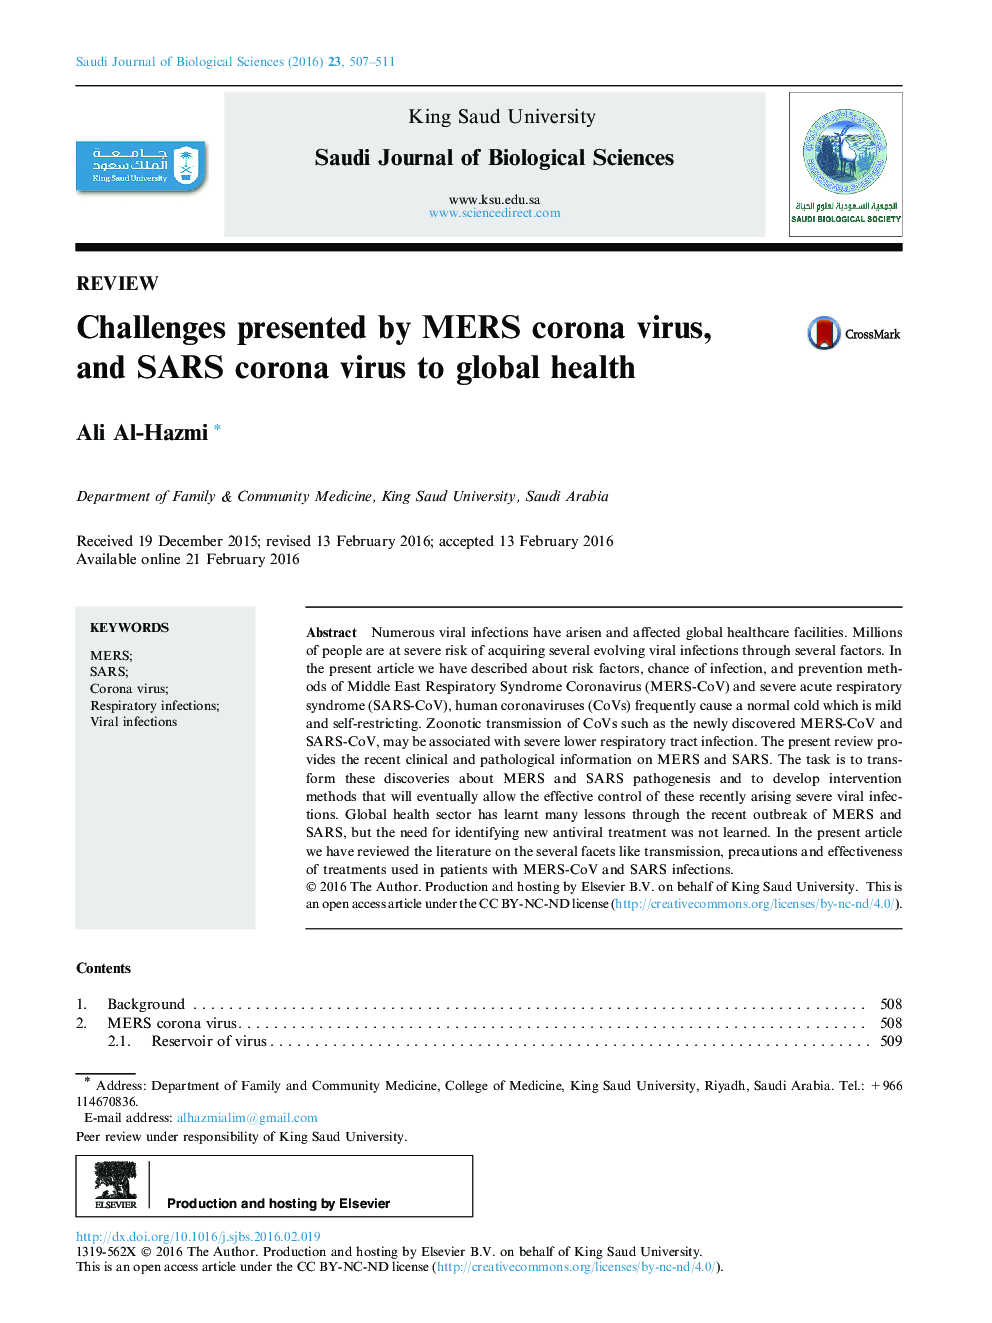 Challenges presented by MERS corona virus, and SARS corona virus to global health 